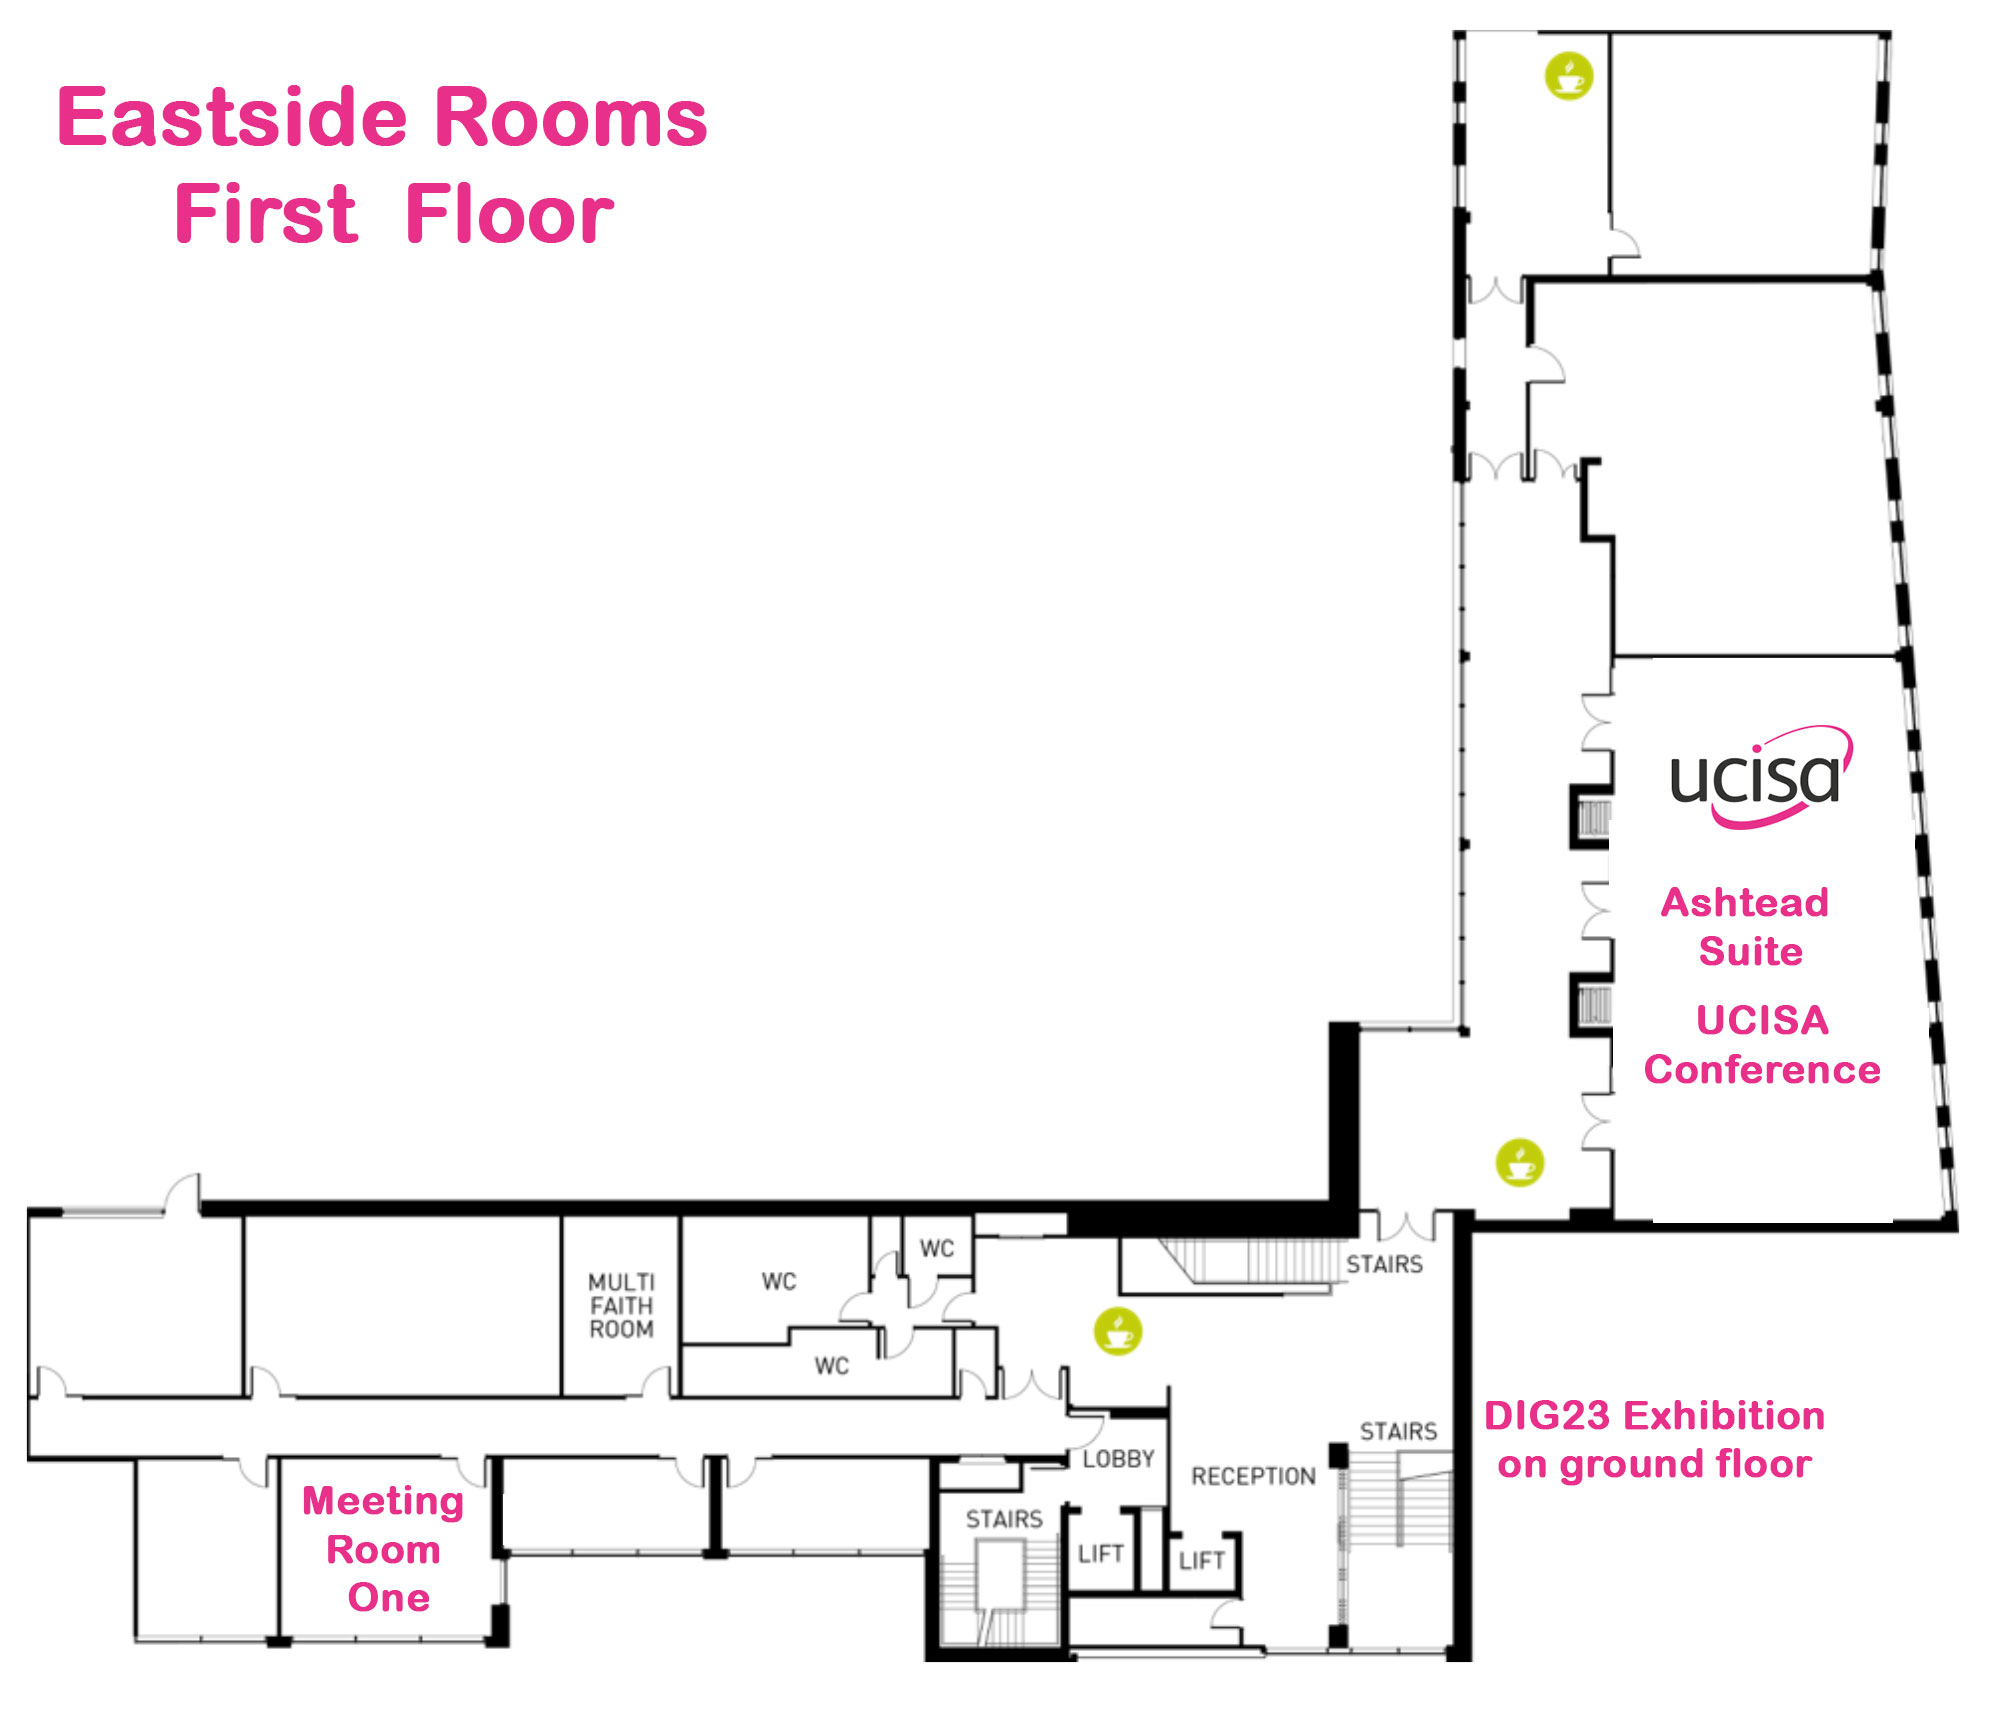 Eastside rooms first floor